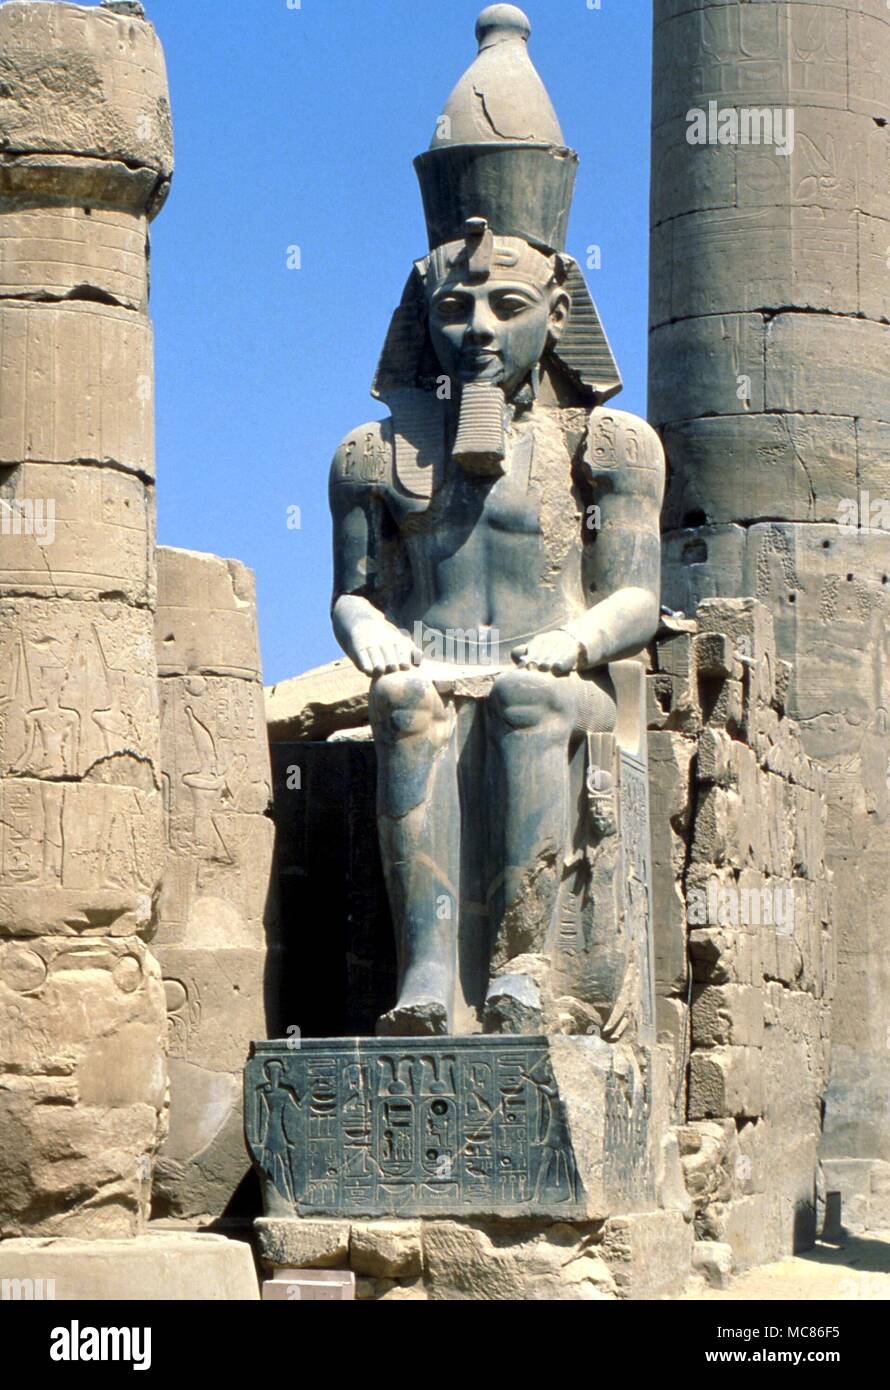 La gigantesca estatua de Ramsés II en el Templo de Luxor, Egipto Foto de stock